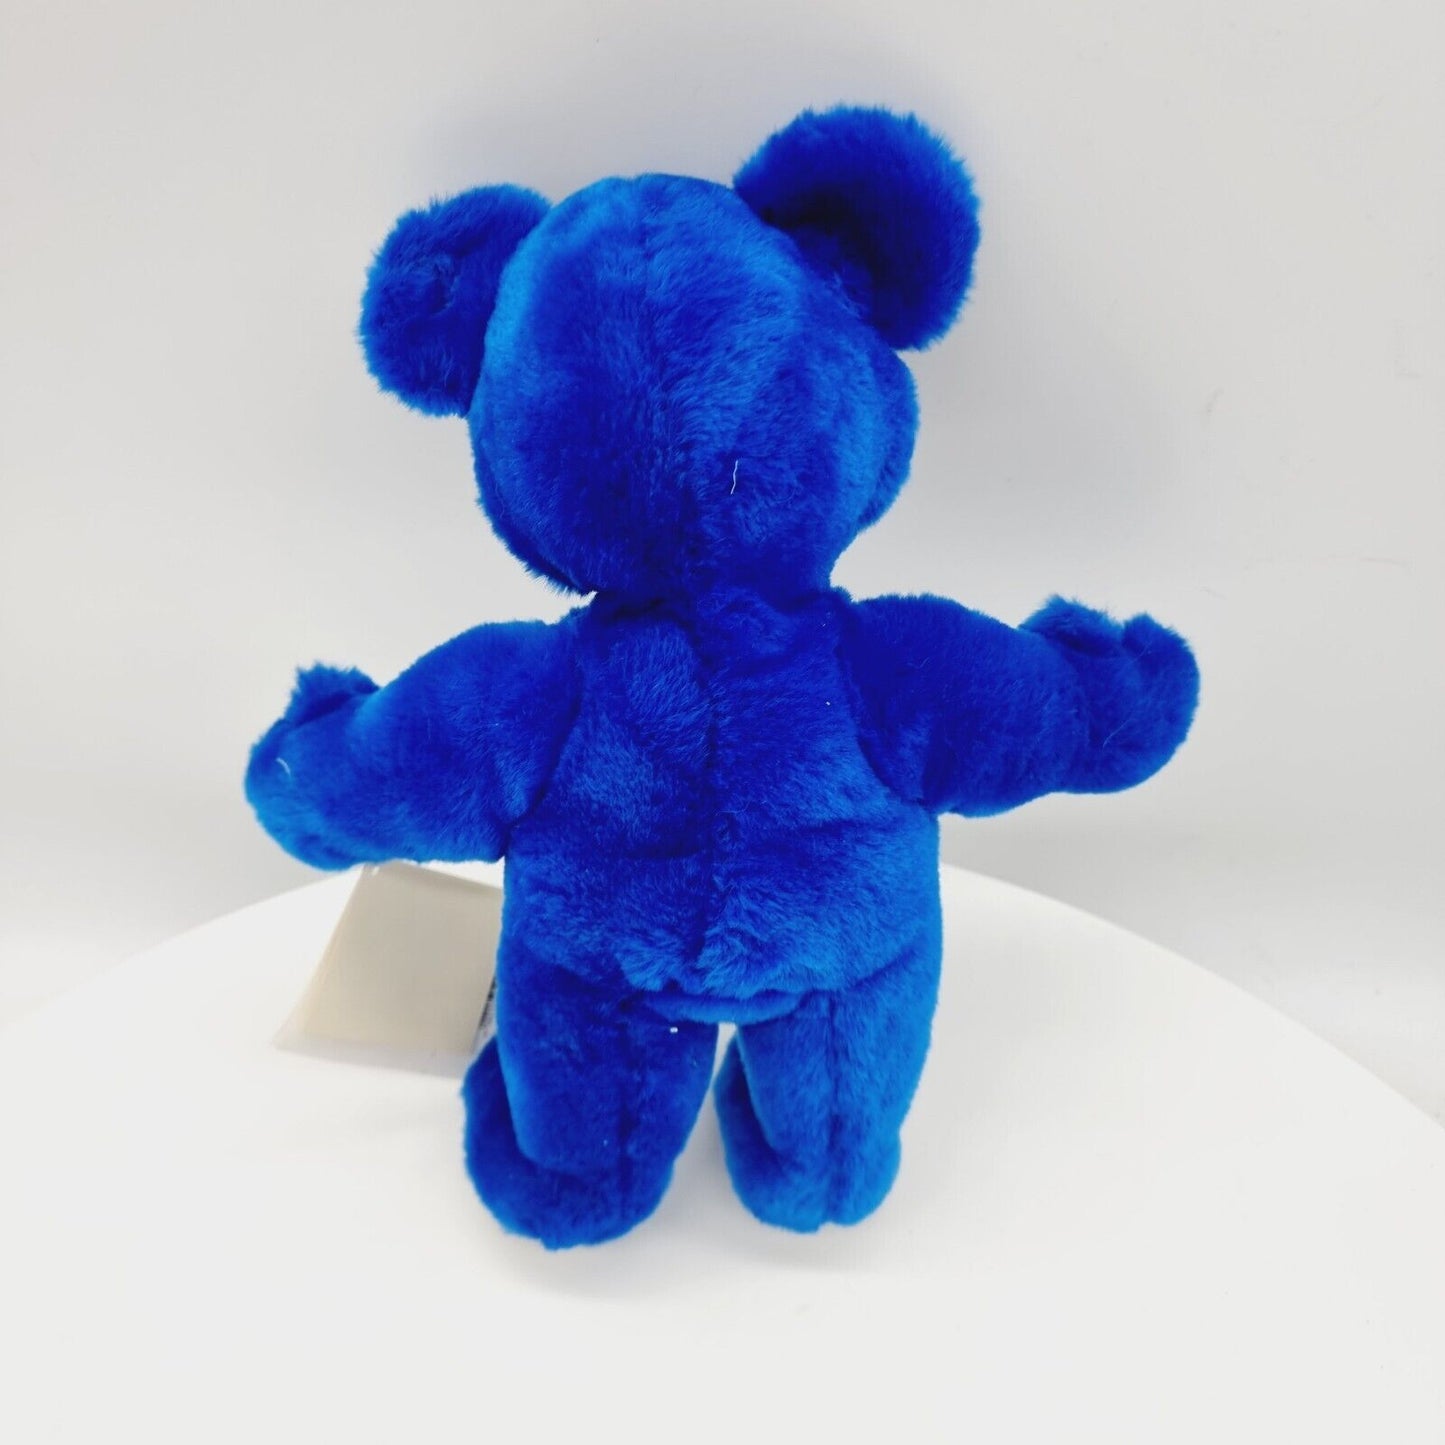 Steiff 996757 Pampers Pamy-Bär Teddybär blau limitiert 5000 Jahr 1998 Zertifikat